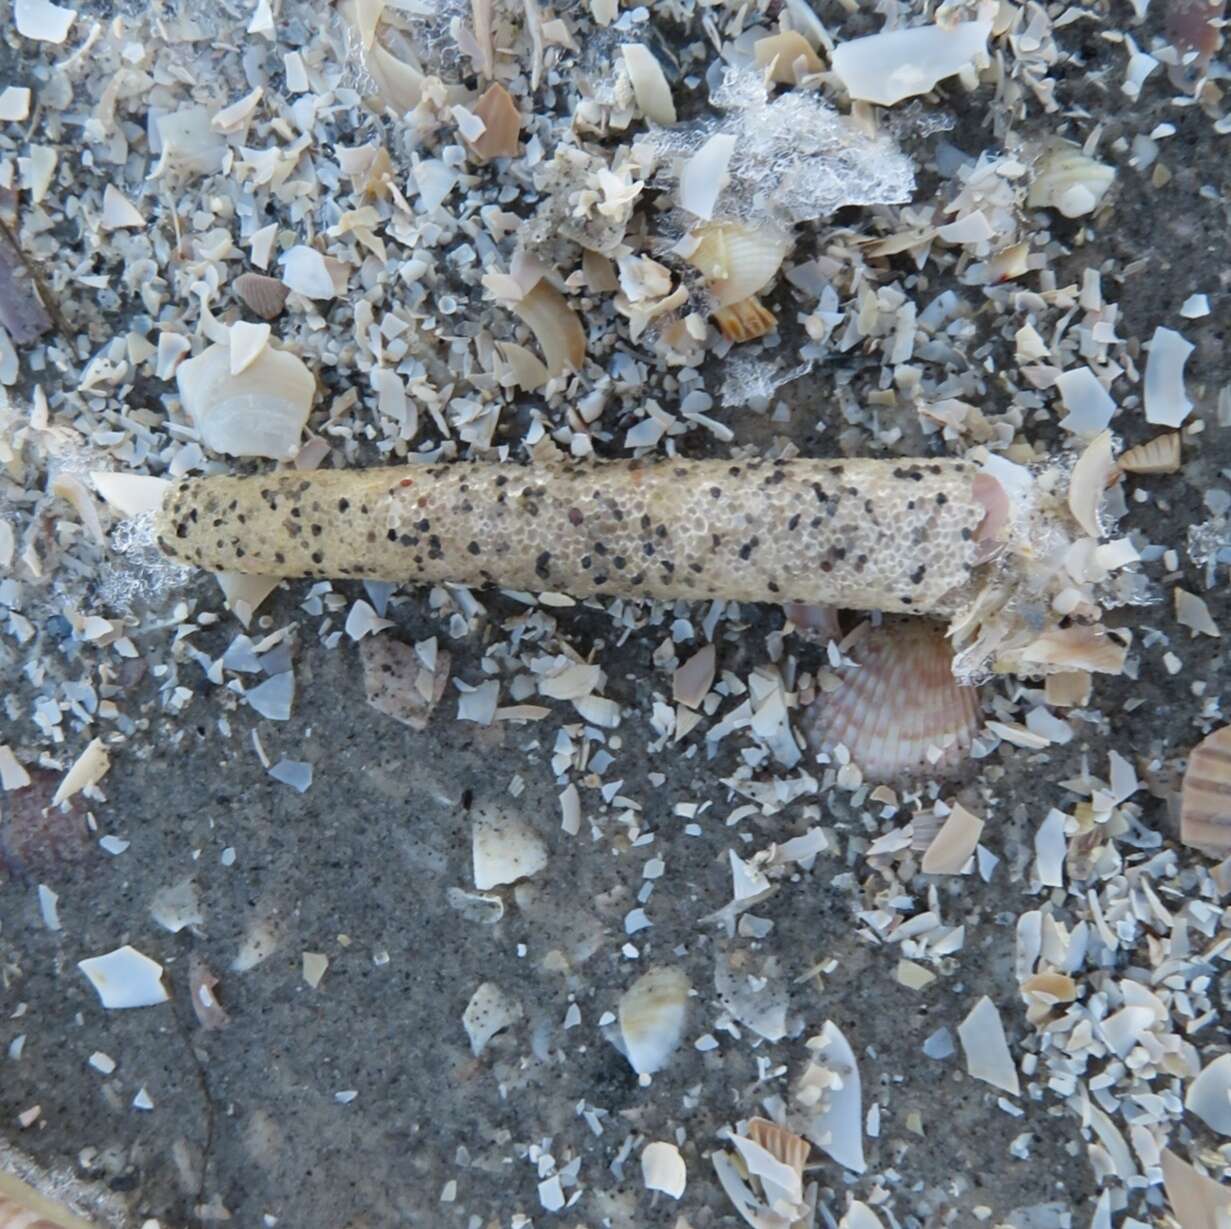 Image of trumpet worm